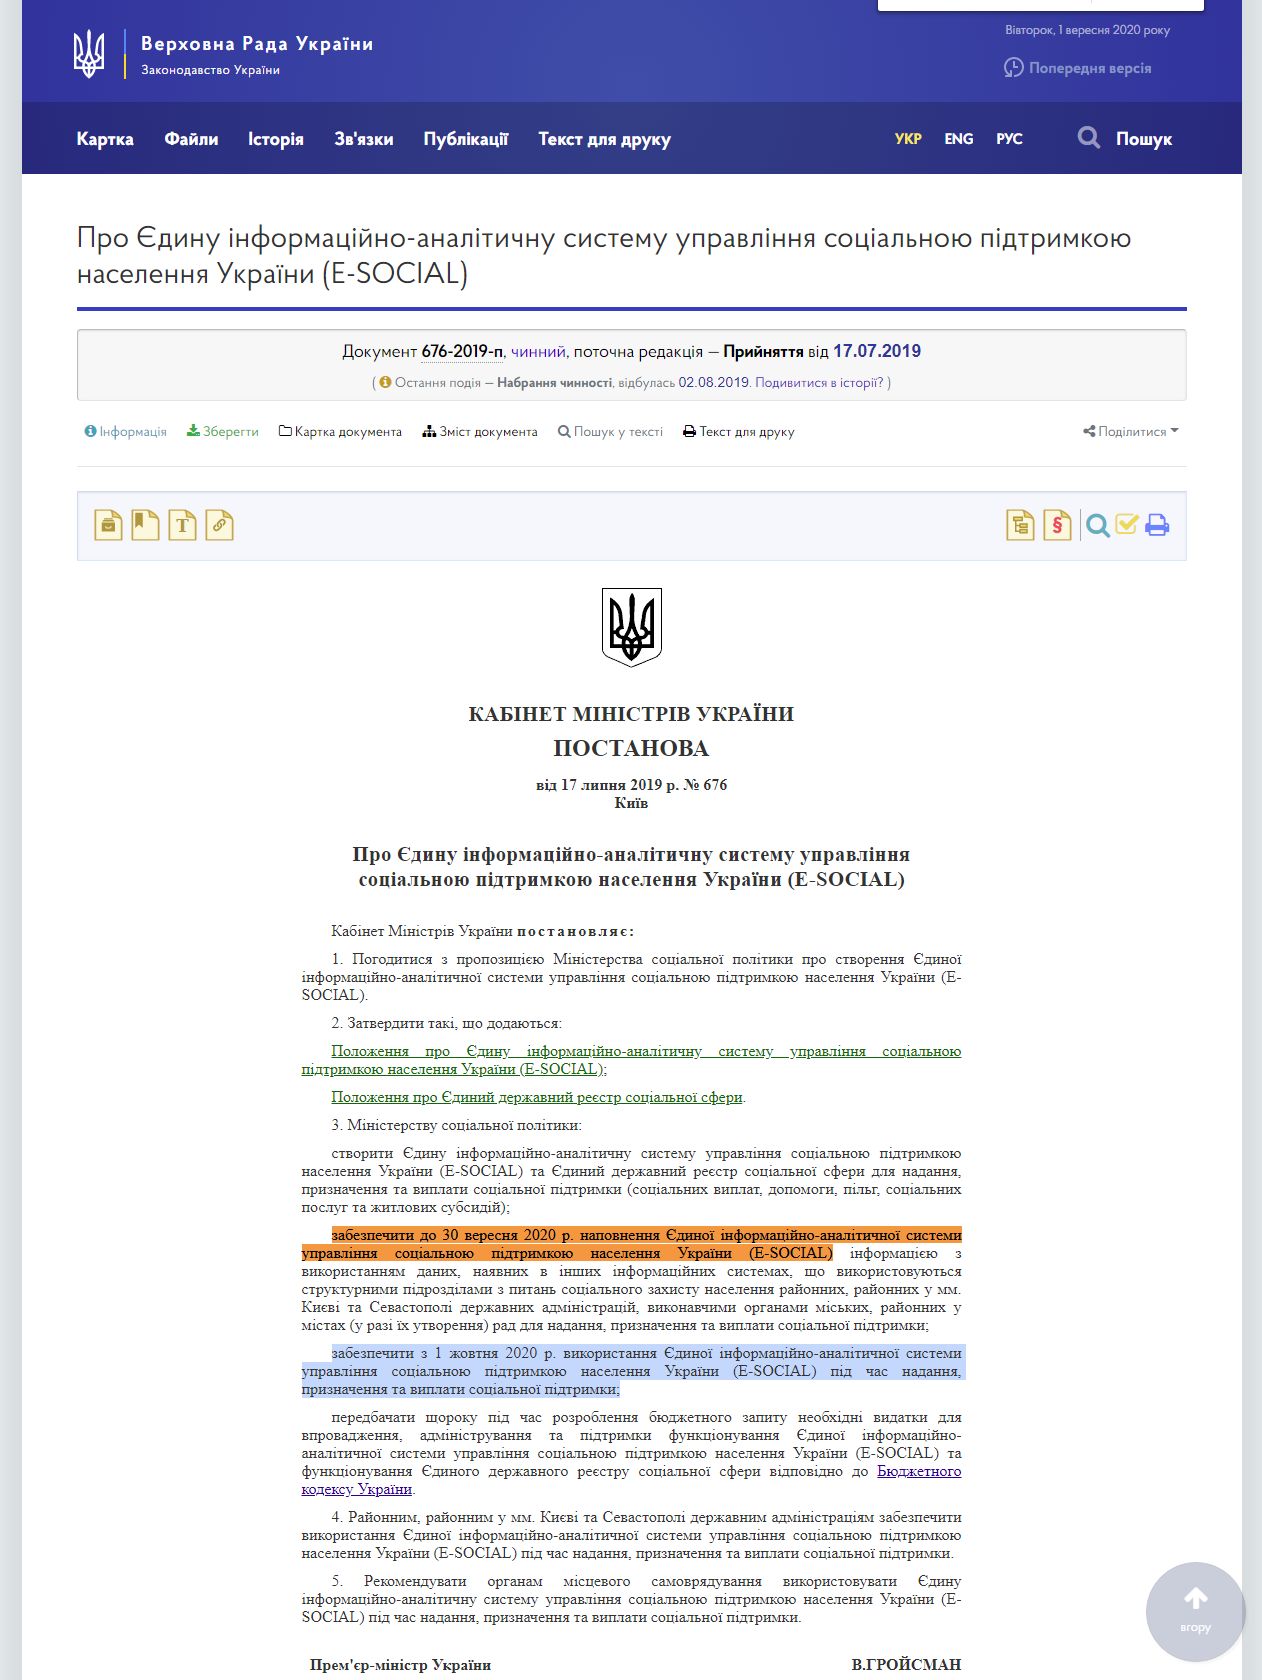 https://zakon.rada.gov.ua/laws/show/676-2019-%D0%BF#Text